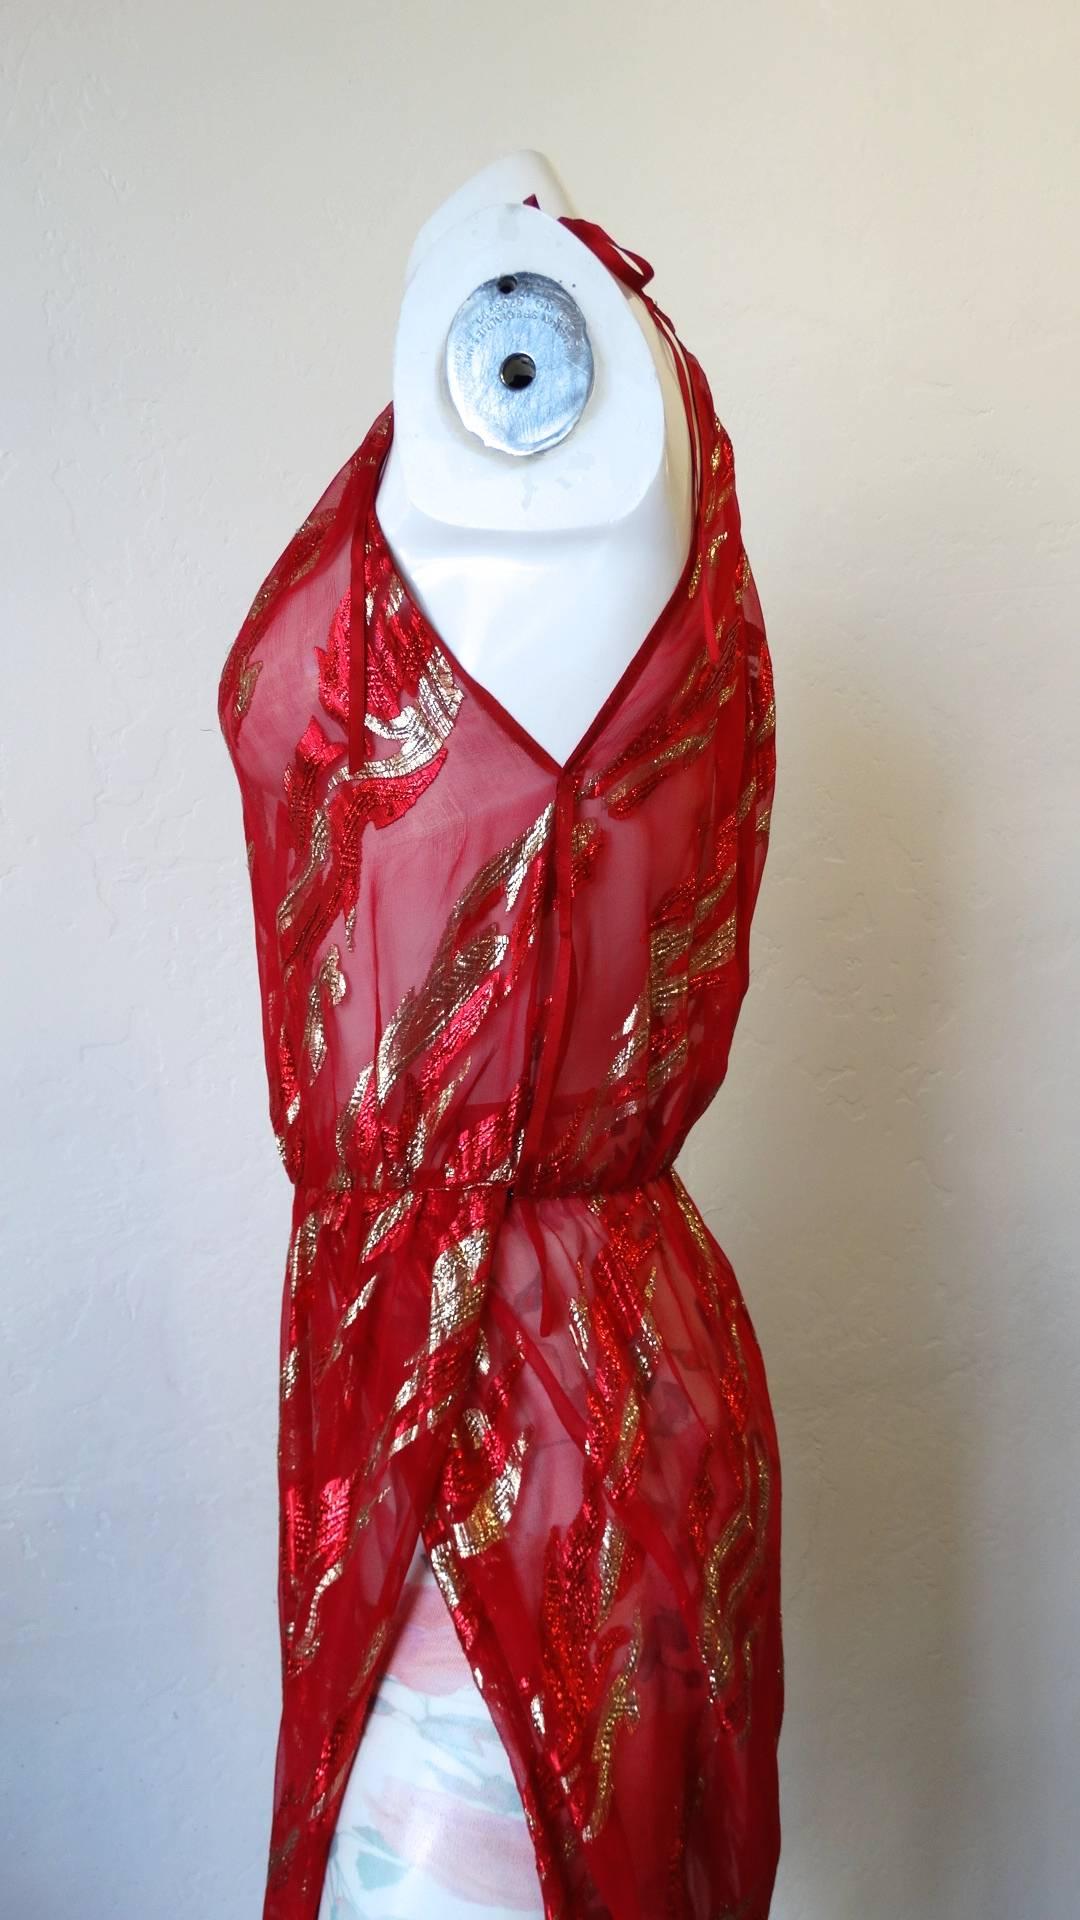 Saint Laurent Rive Gauche Red Sheer Printed Halter Dress, 1980s  9